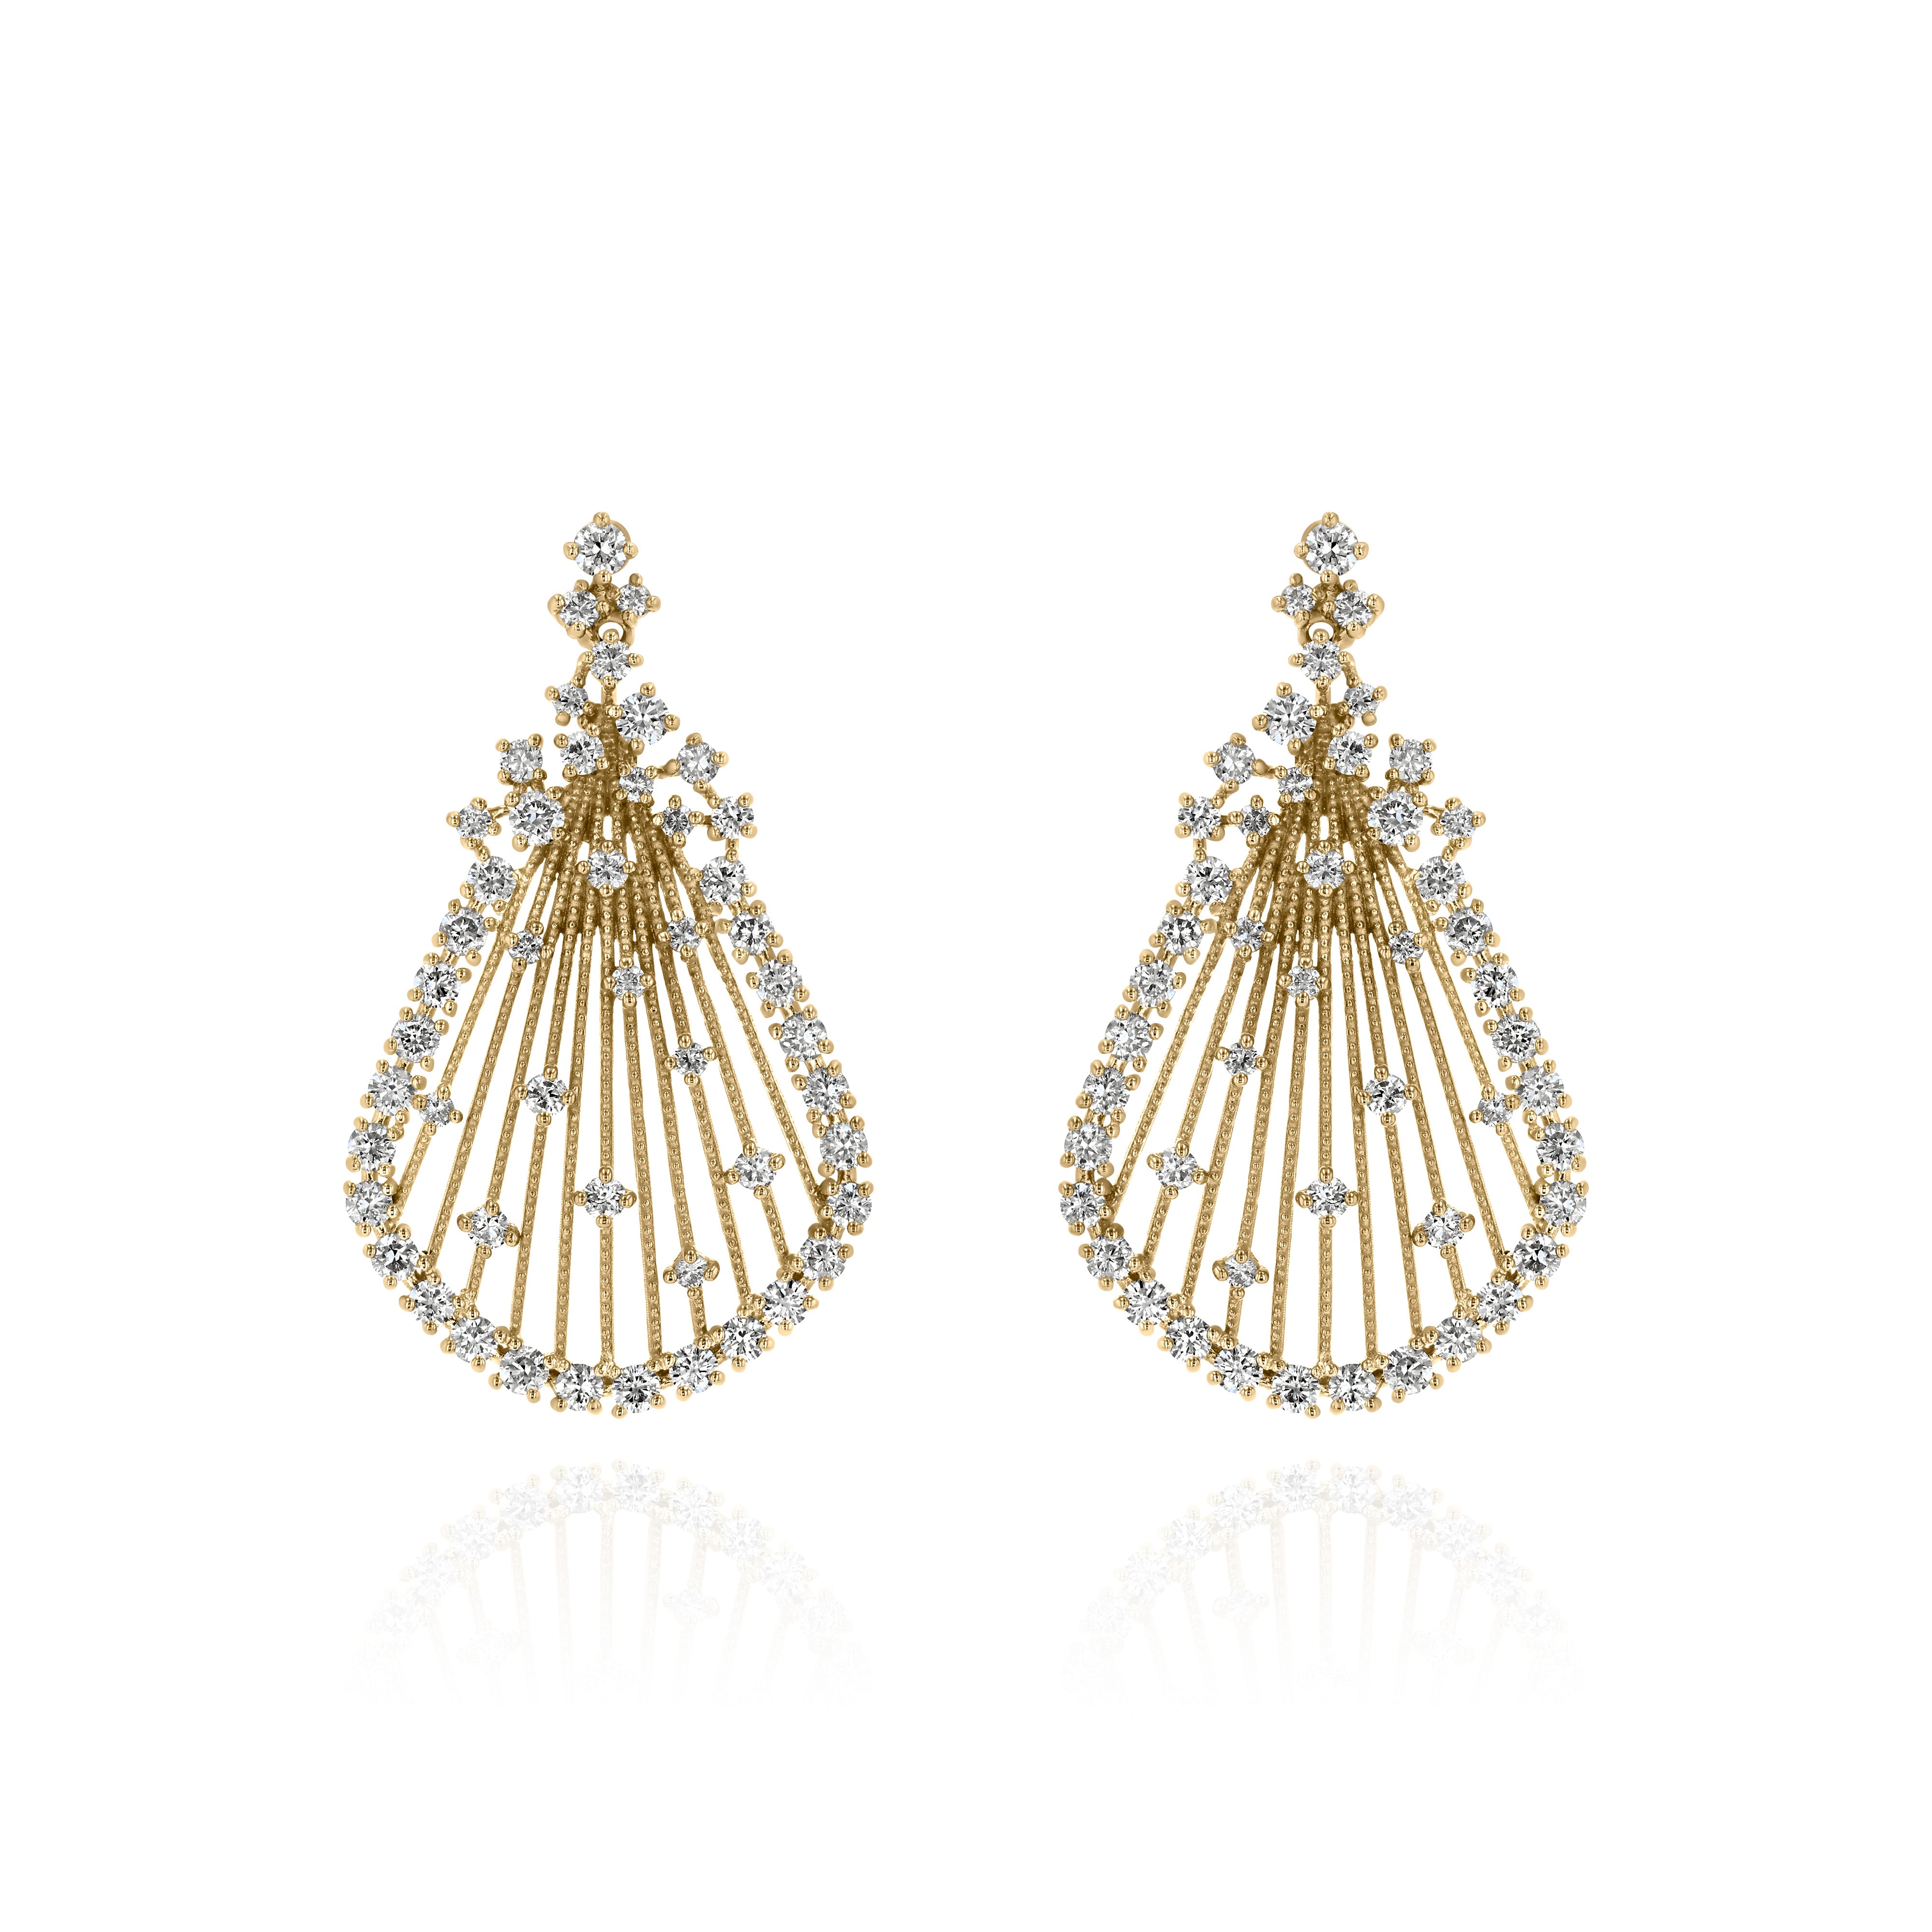 Raindrop shaped Yellow Gold Earrings with small round Diamonds, Medium